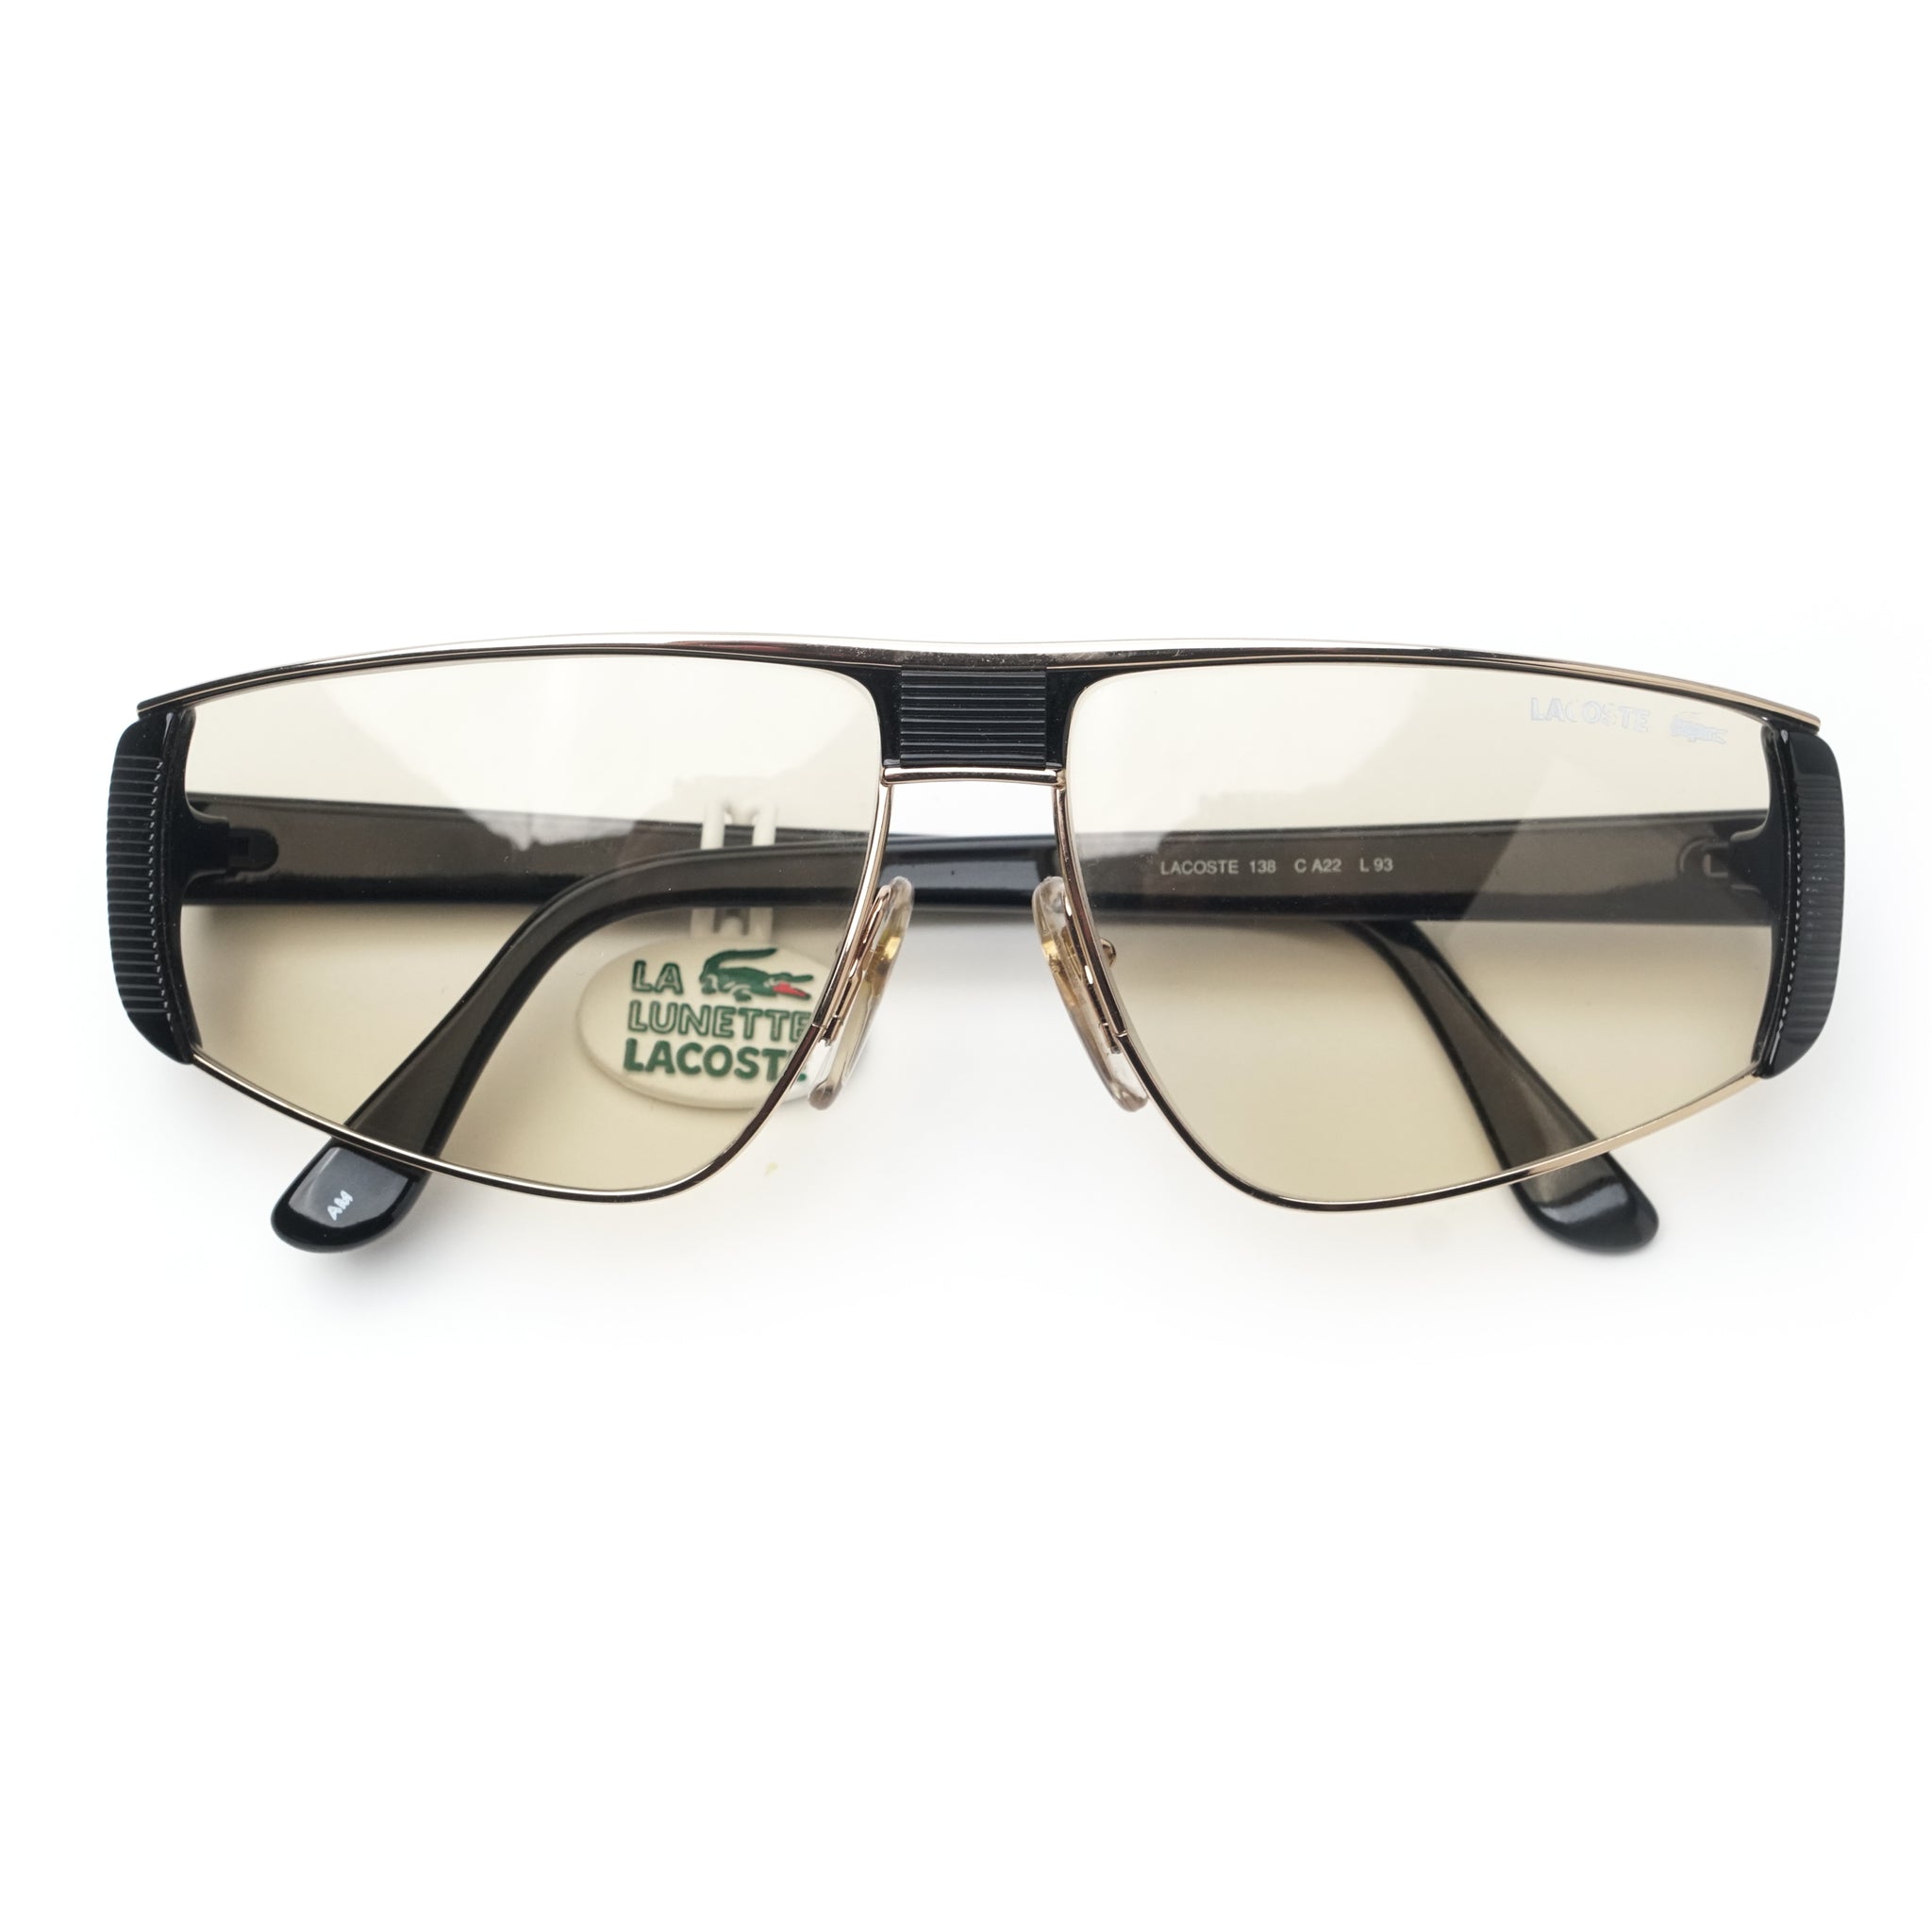 Buy Vintage Man's Eyewear 1980's/lacoste 881 59-14 Gold/silver Polished  Metal Frame/ Pilot Oversize Sunglasses Aviator France Design Rockabilly  Online in India - Etsy